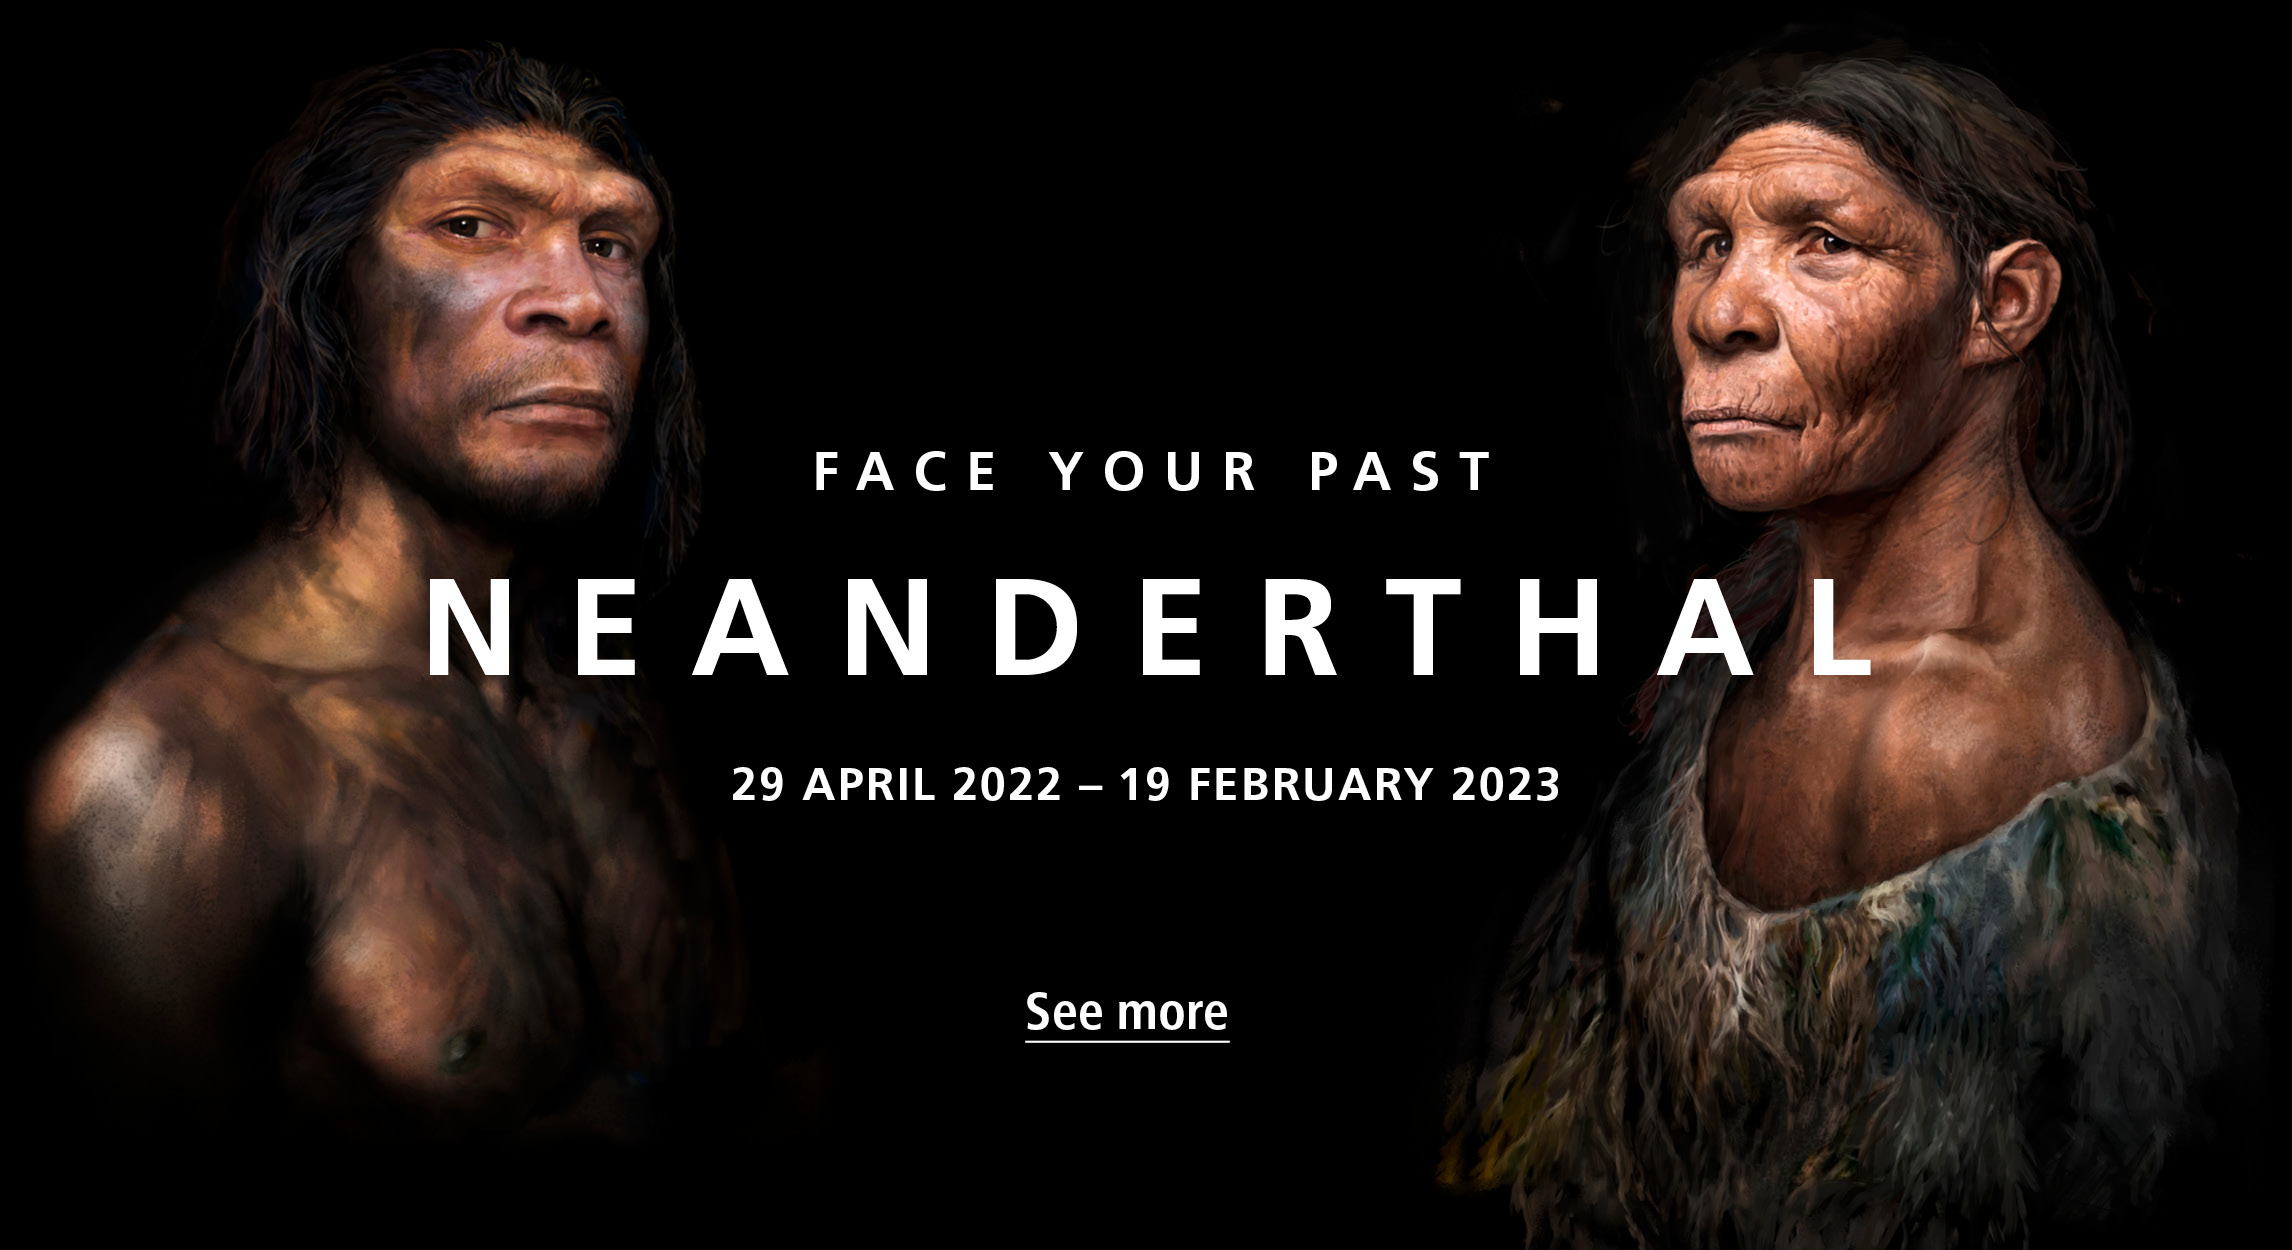 Neandertaler